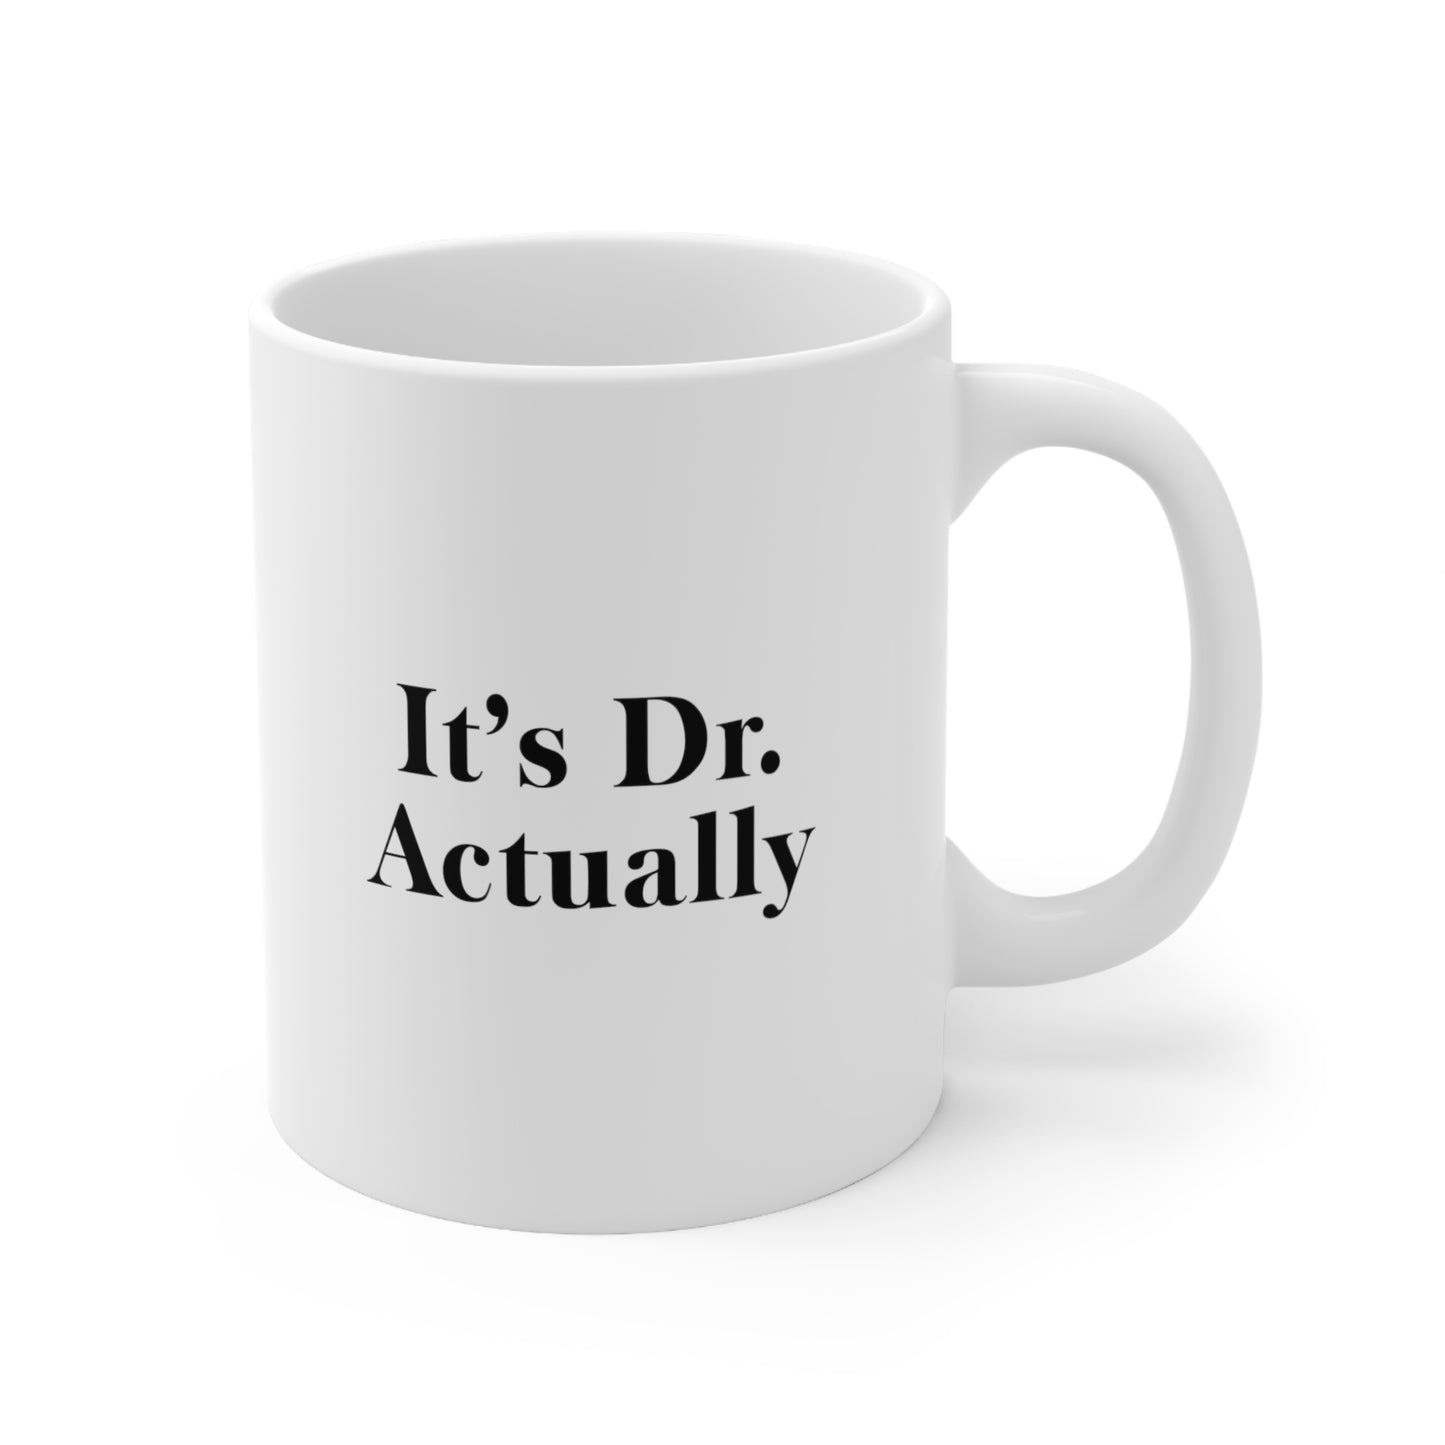 It's Dr Actually Coffee Mug 11oz